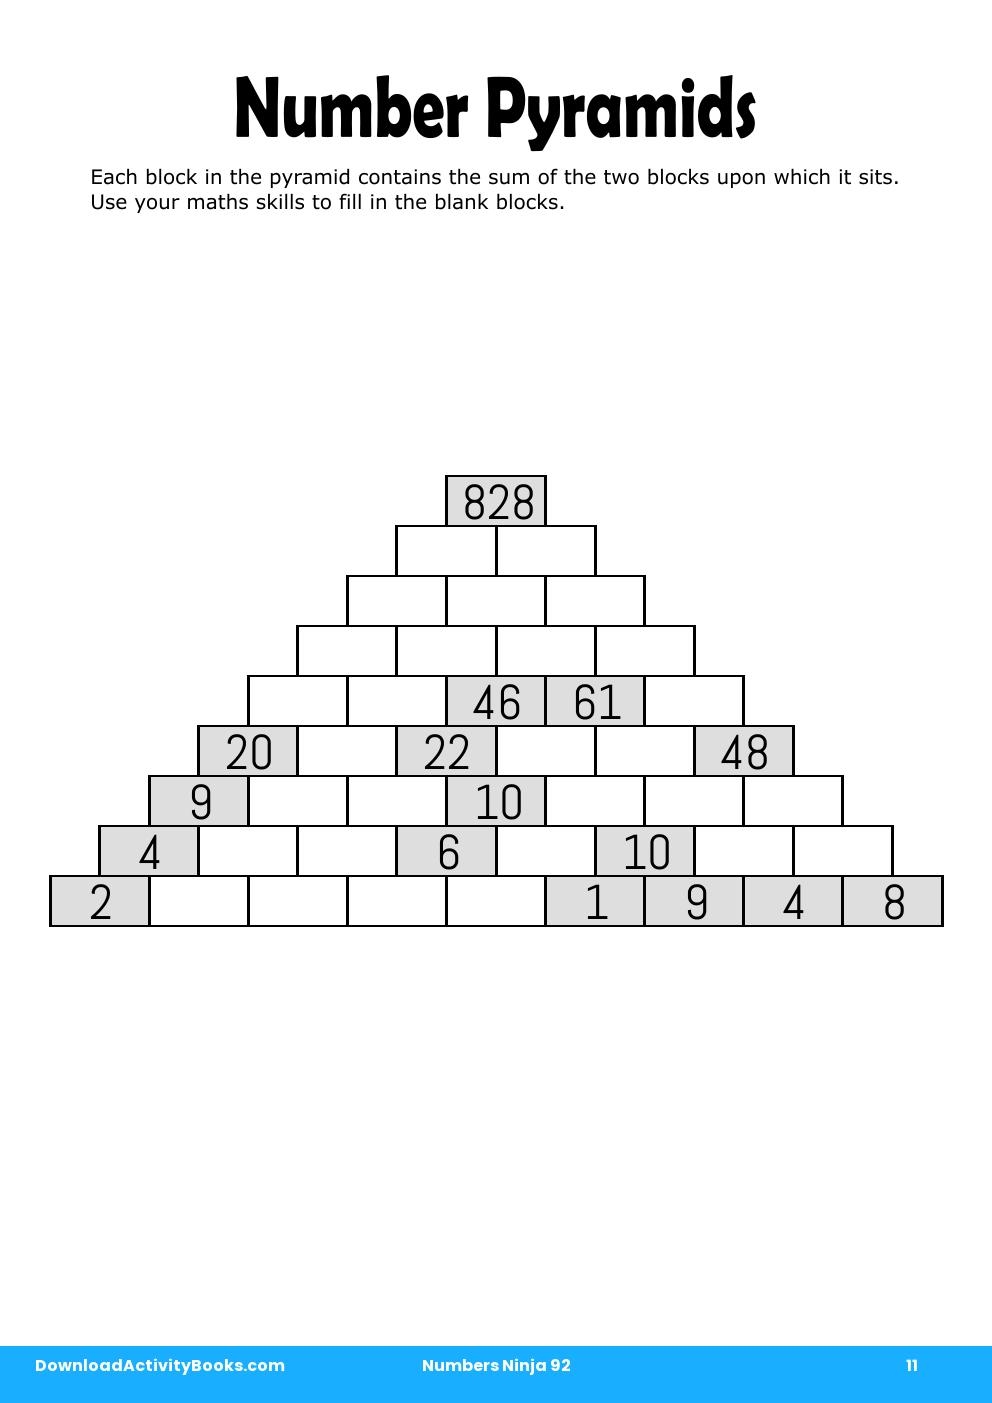 Number Pyramids in Numbers Ninja 92